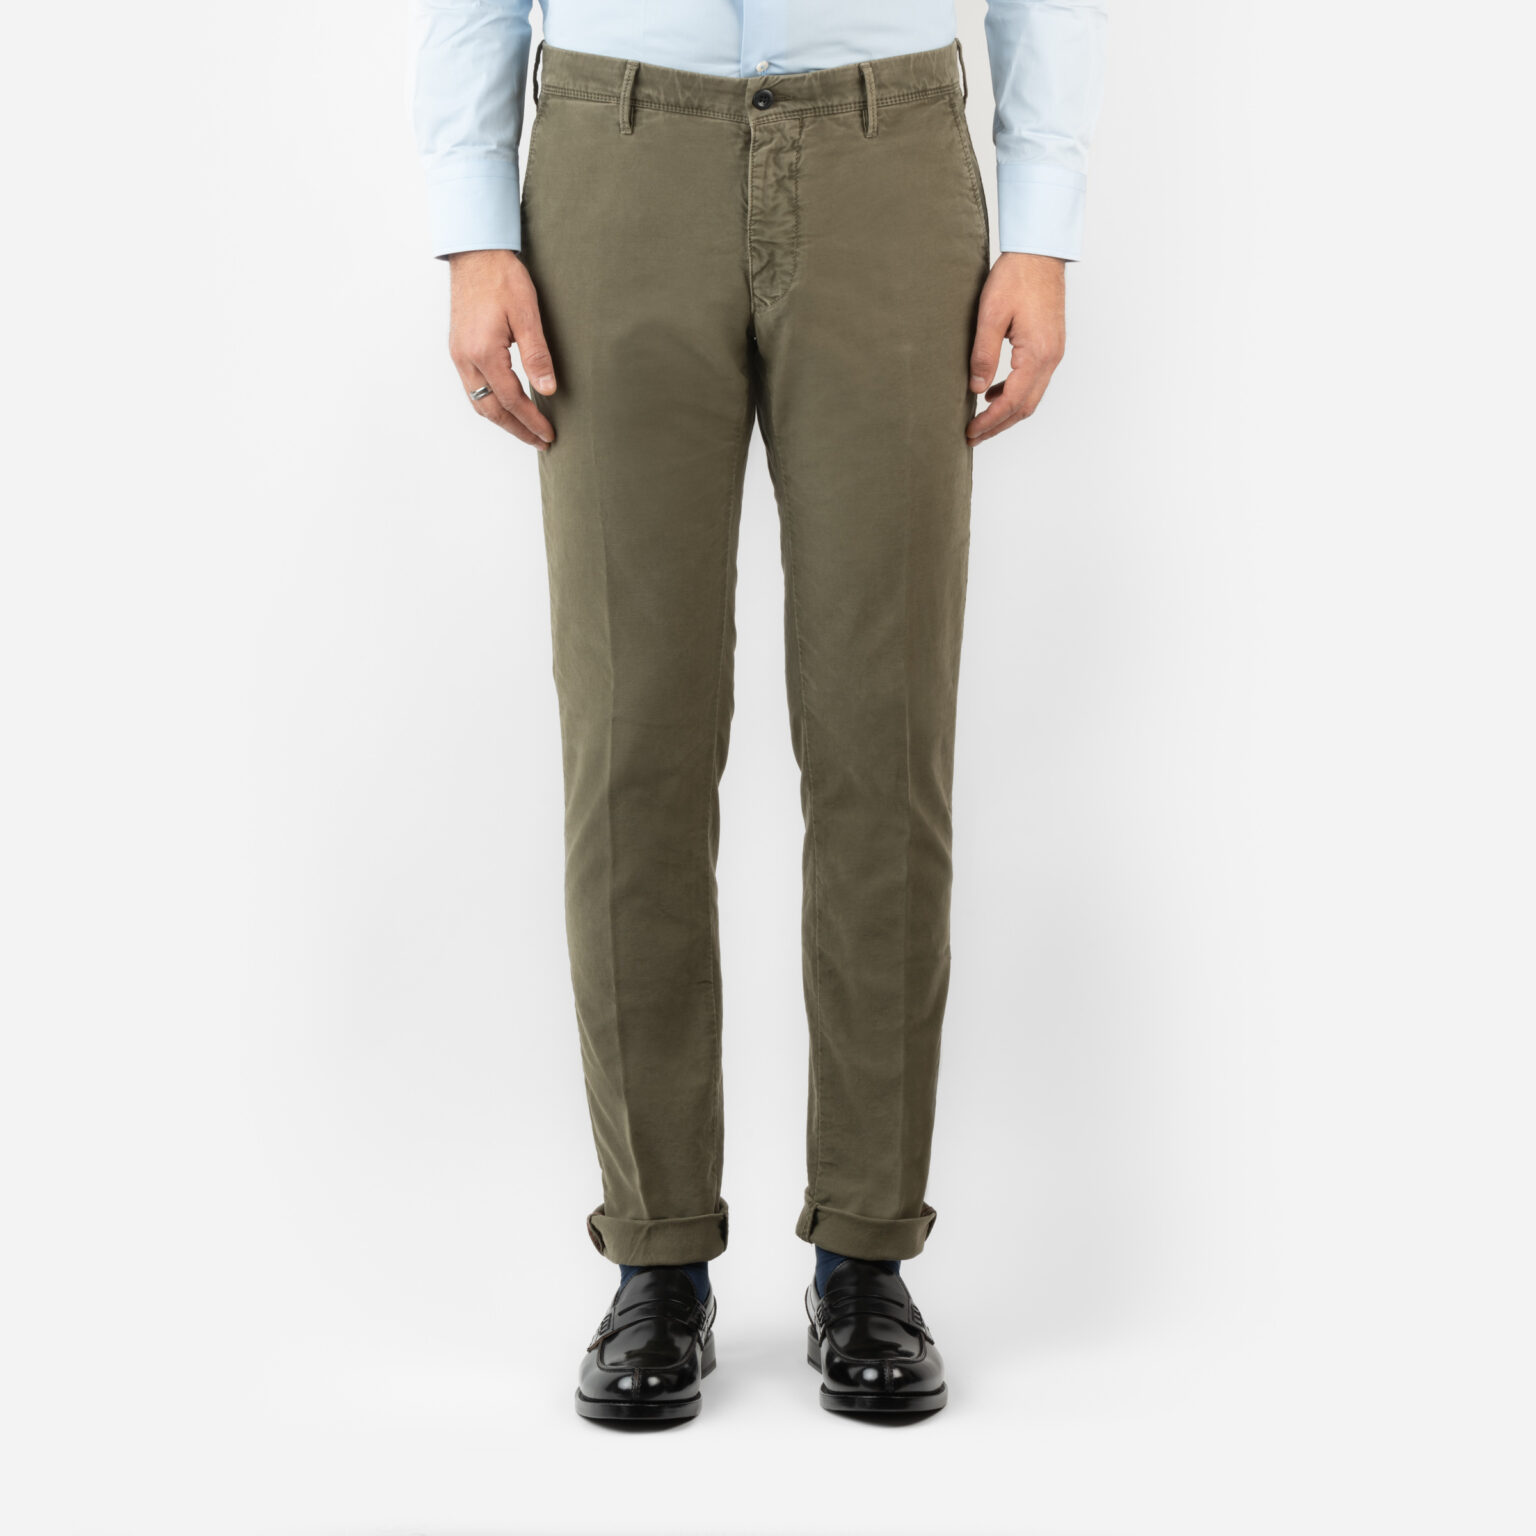 Pantalone Incotex Slack's in cotone, slim fit.